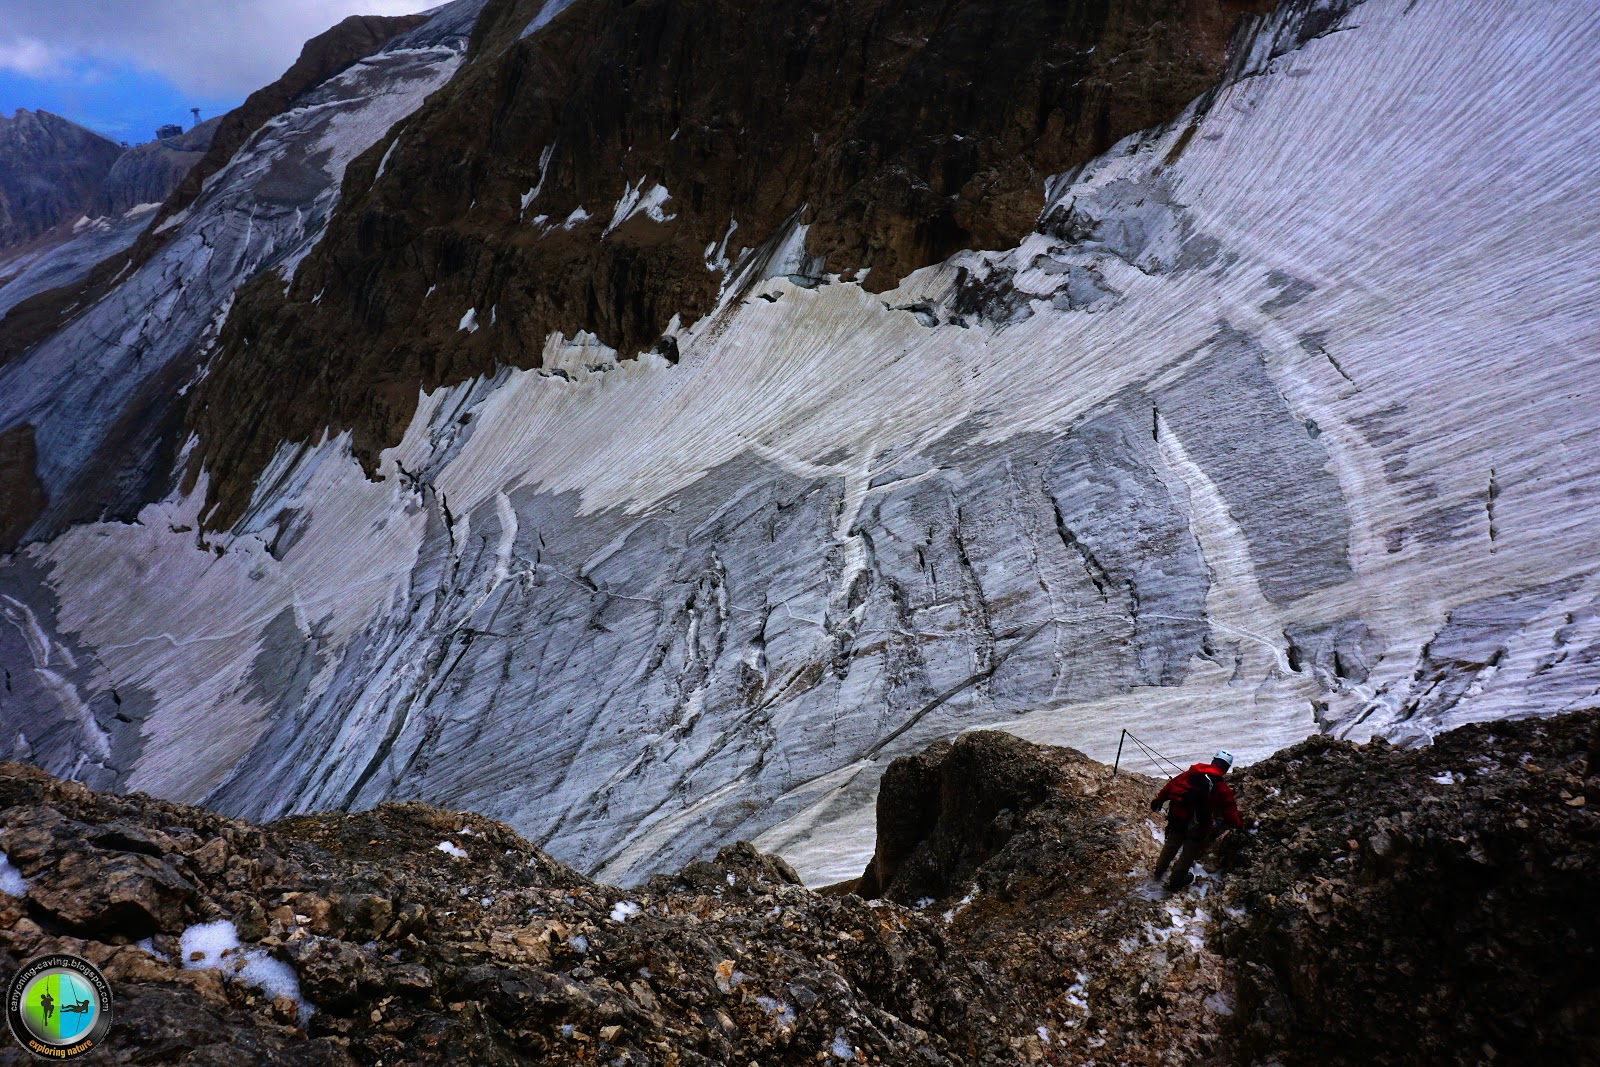 Canyoning - Caving: Normal route, Marmolada glacier, Dolomites